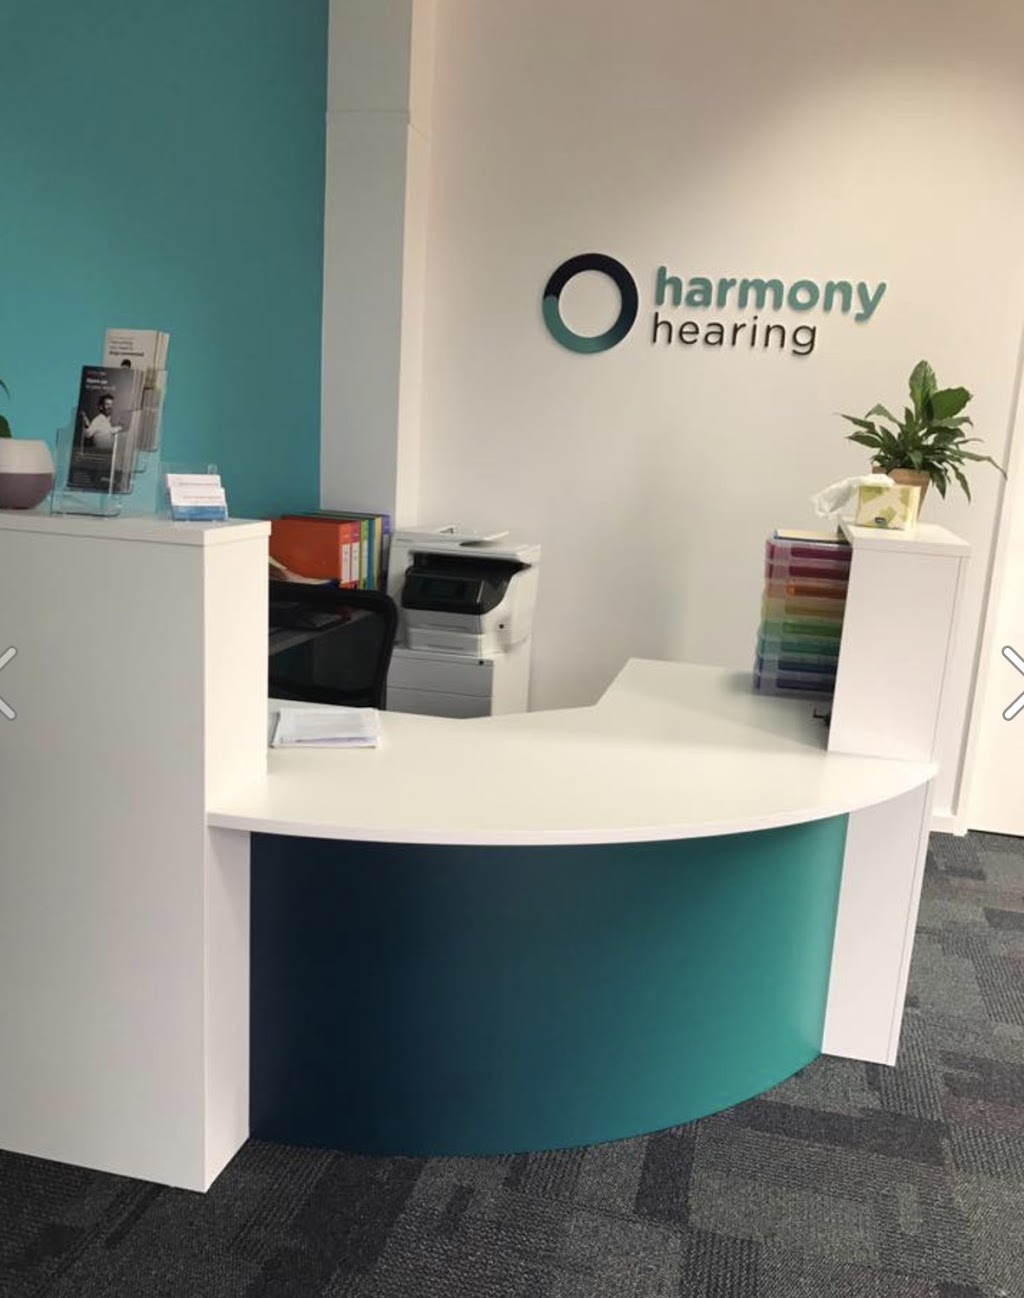 Harmony Hearing & Audiology | doctor | 4/141 Broadway, Nedlands WA 6009, Australia | 0893867816 OR +61 8 9386 7816